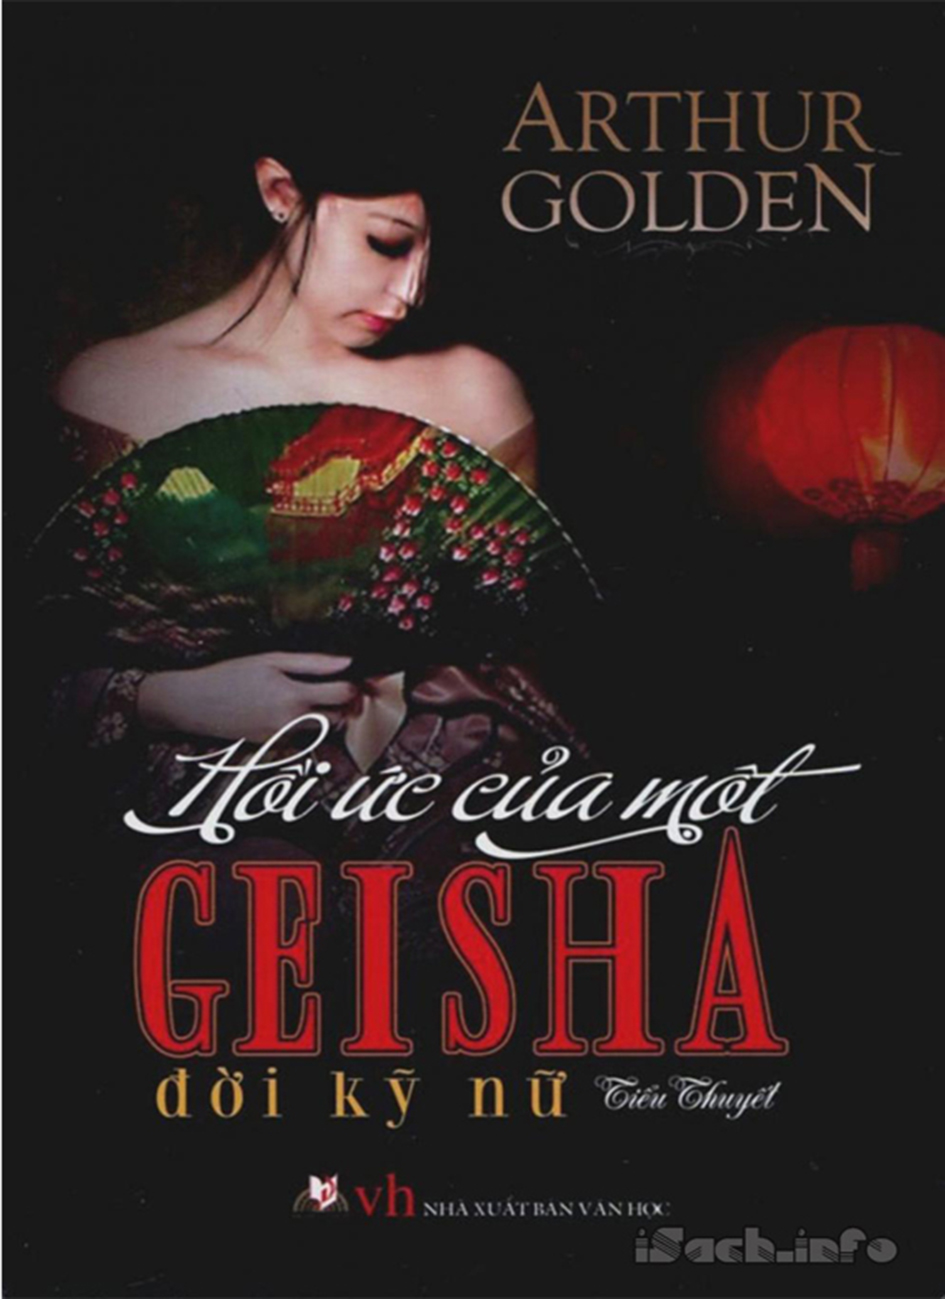 Hoi uc cua mot geisha